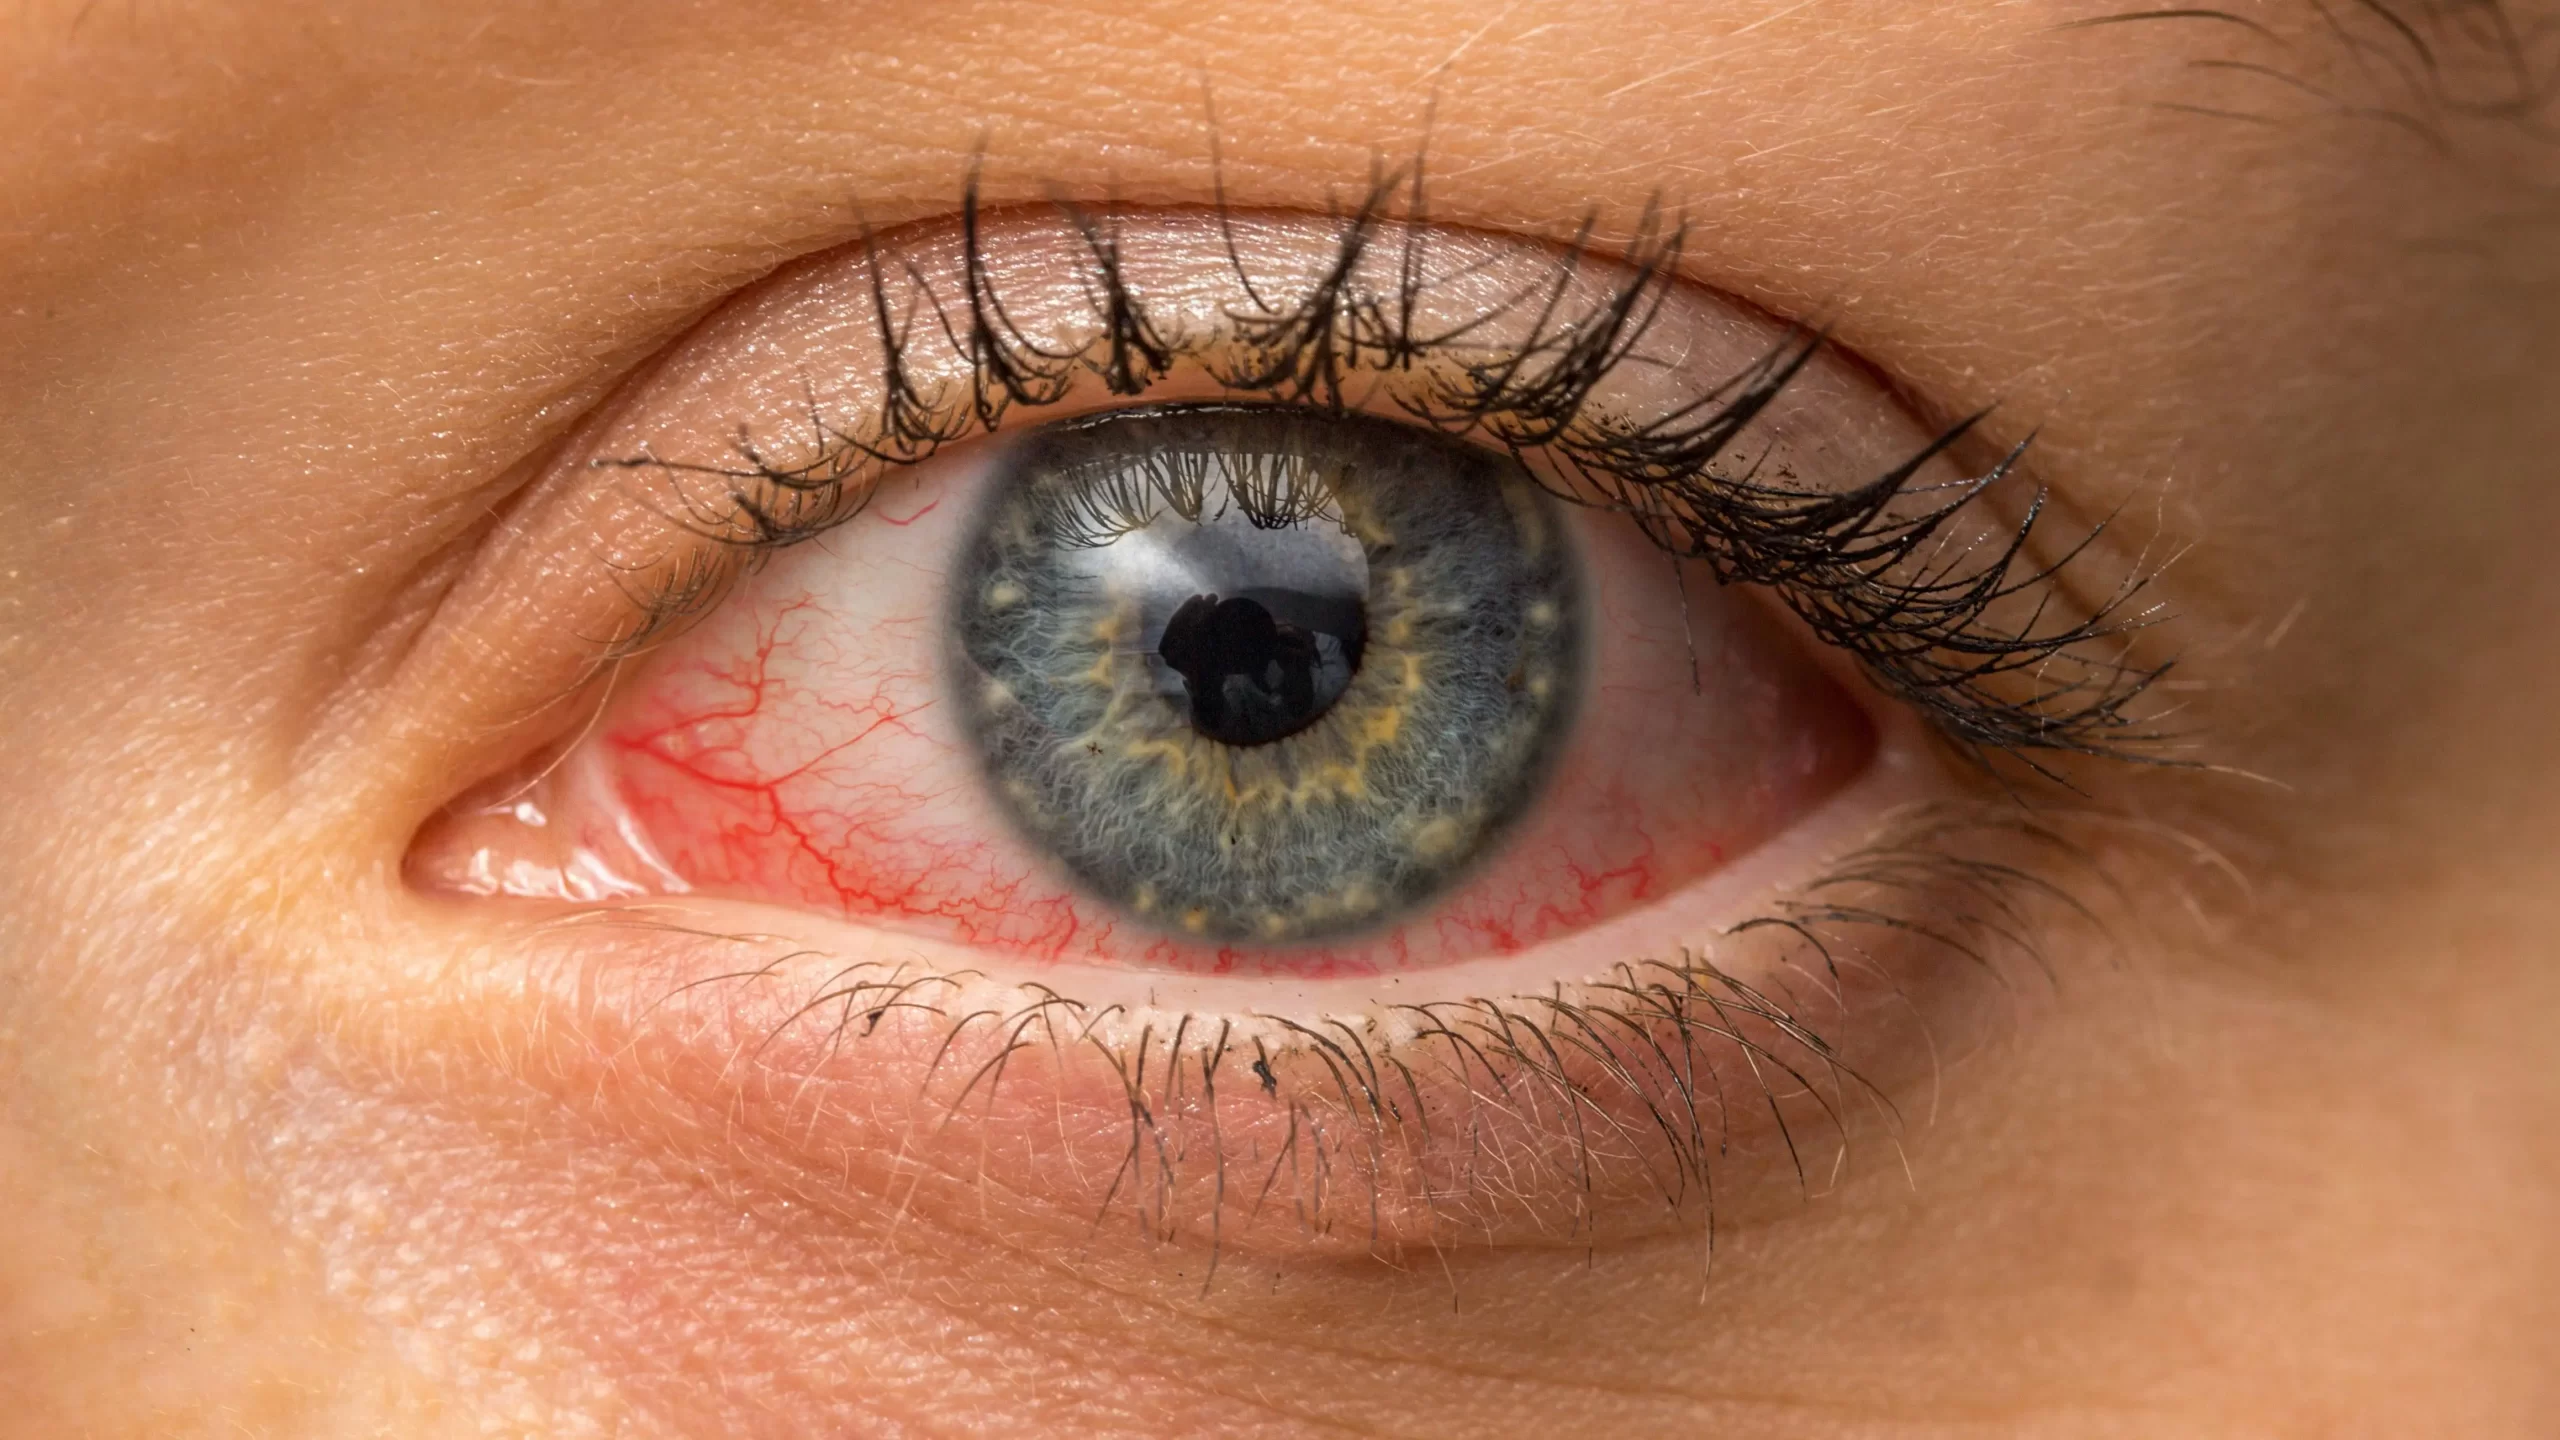 Amid conjunctivitis, eye flu, doctors warn against steroid eye drops